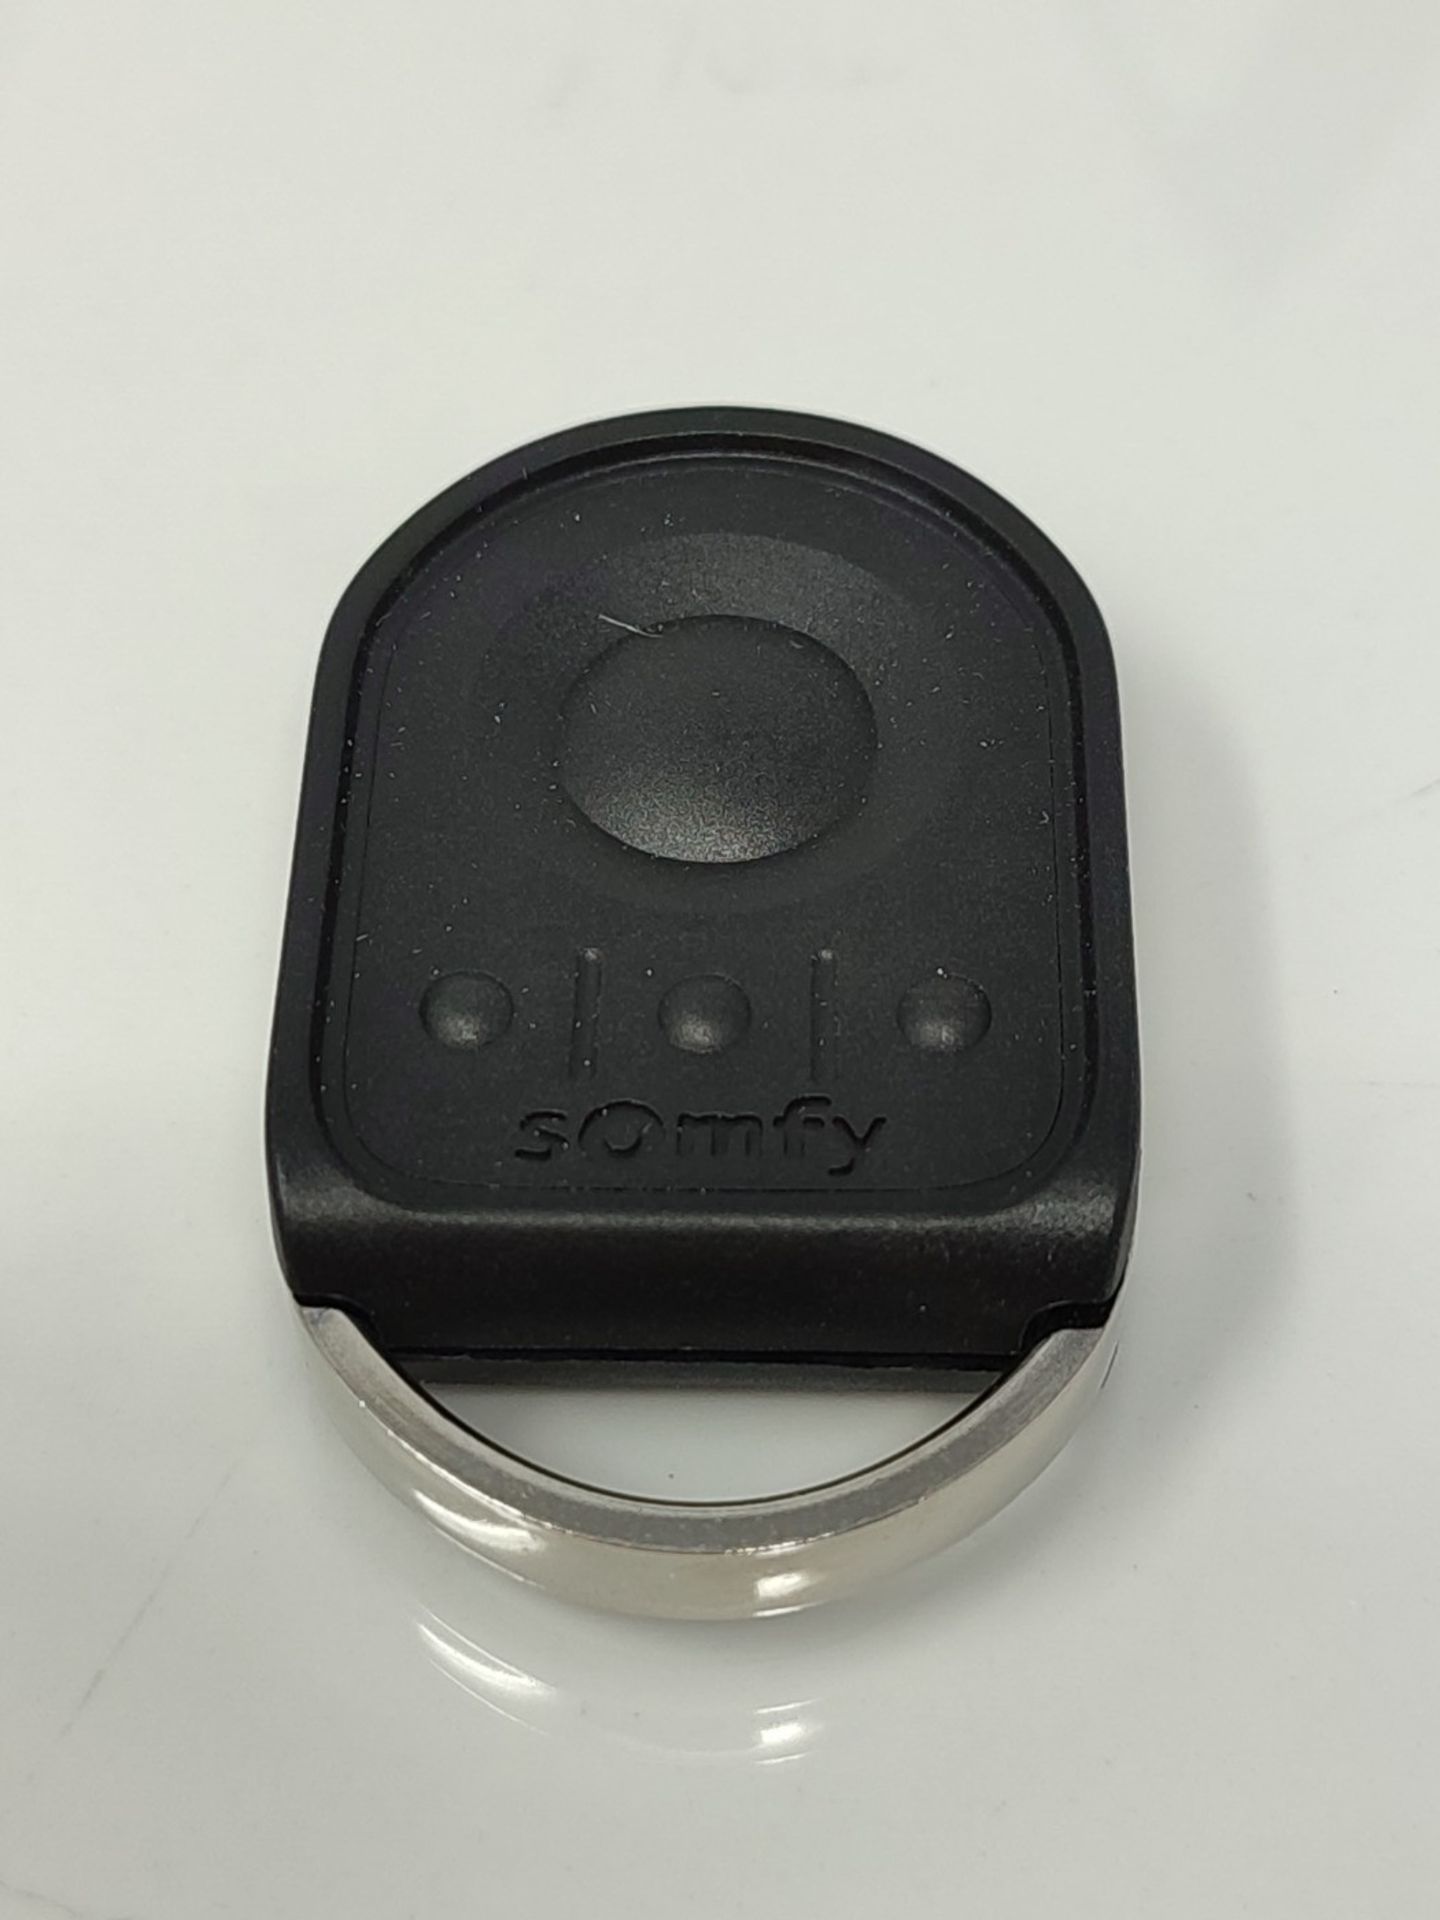 Somfy KEYGO RTS Remote Control - Image 2 of 2